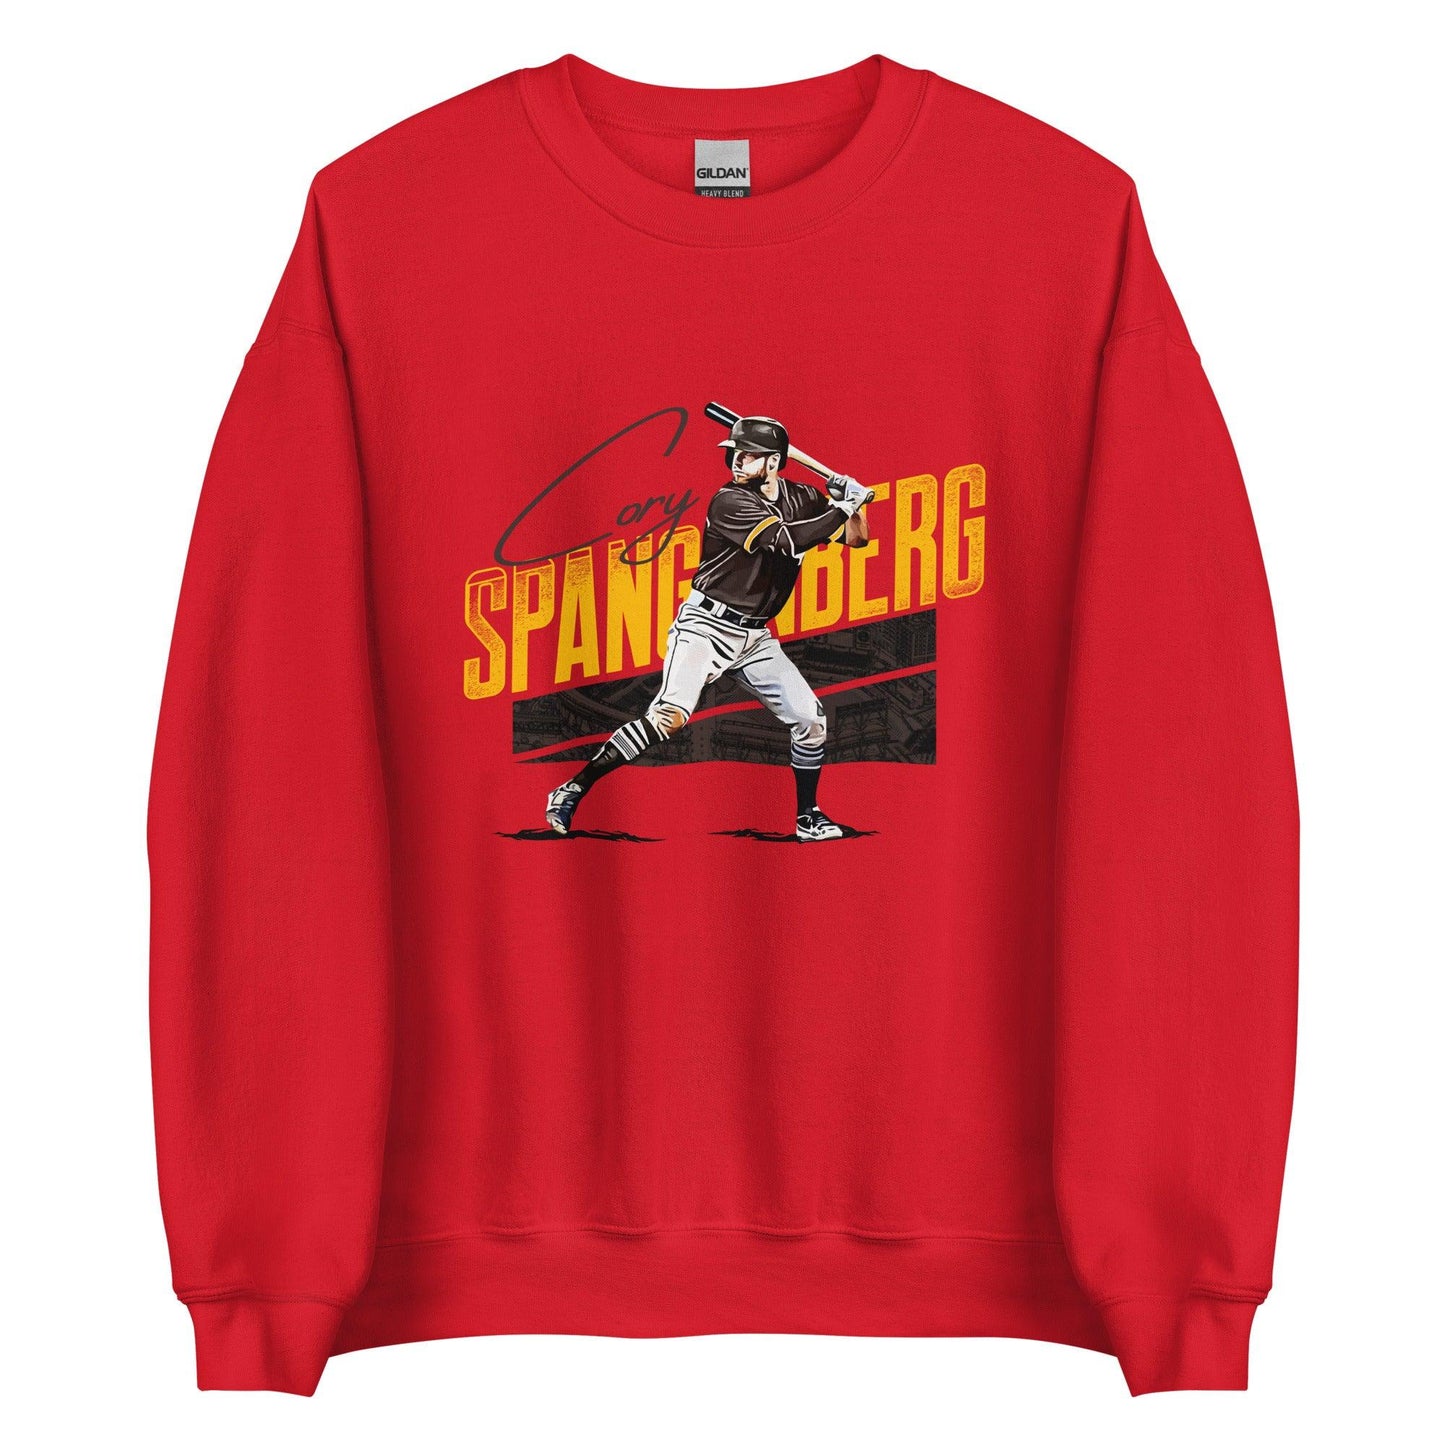 Cory Spangenberg "Gameday" Sweatshirt - Fan Arch